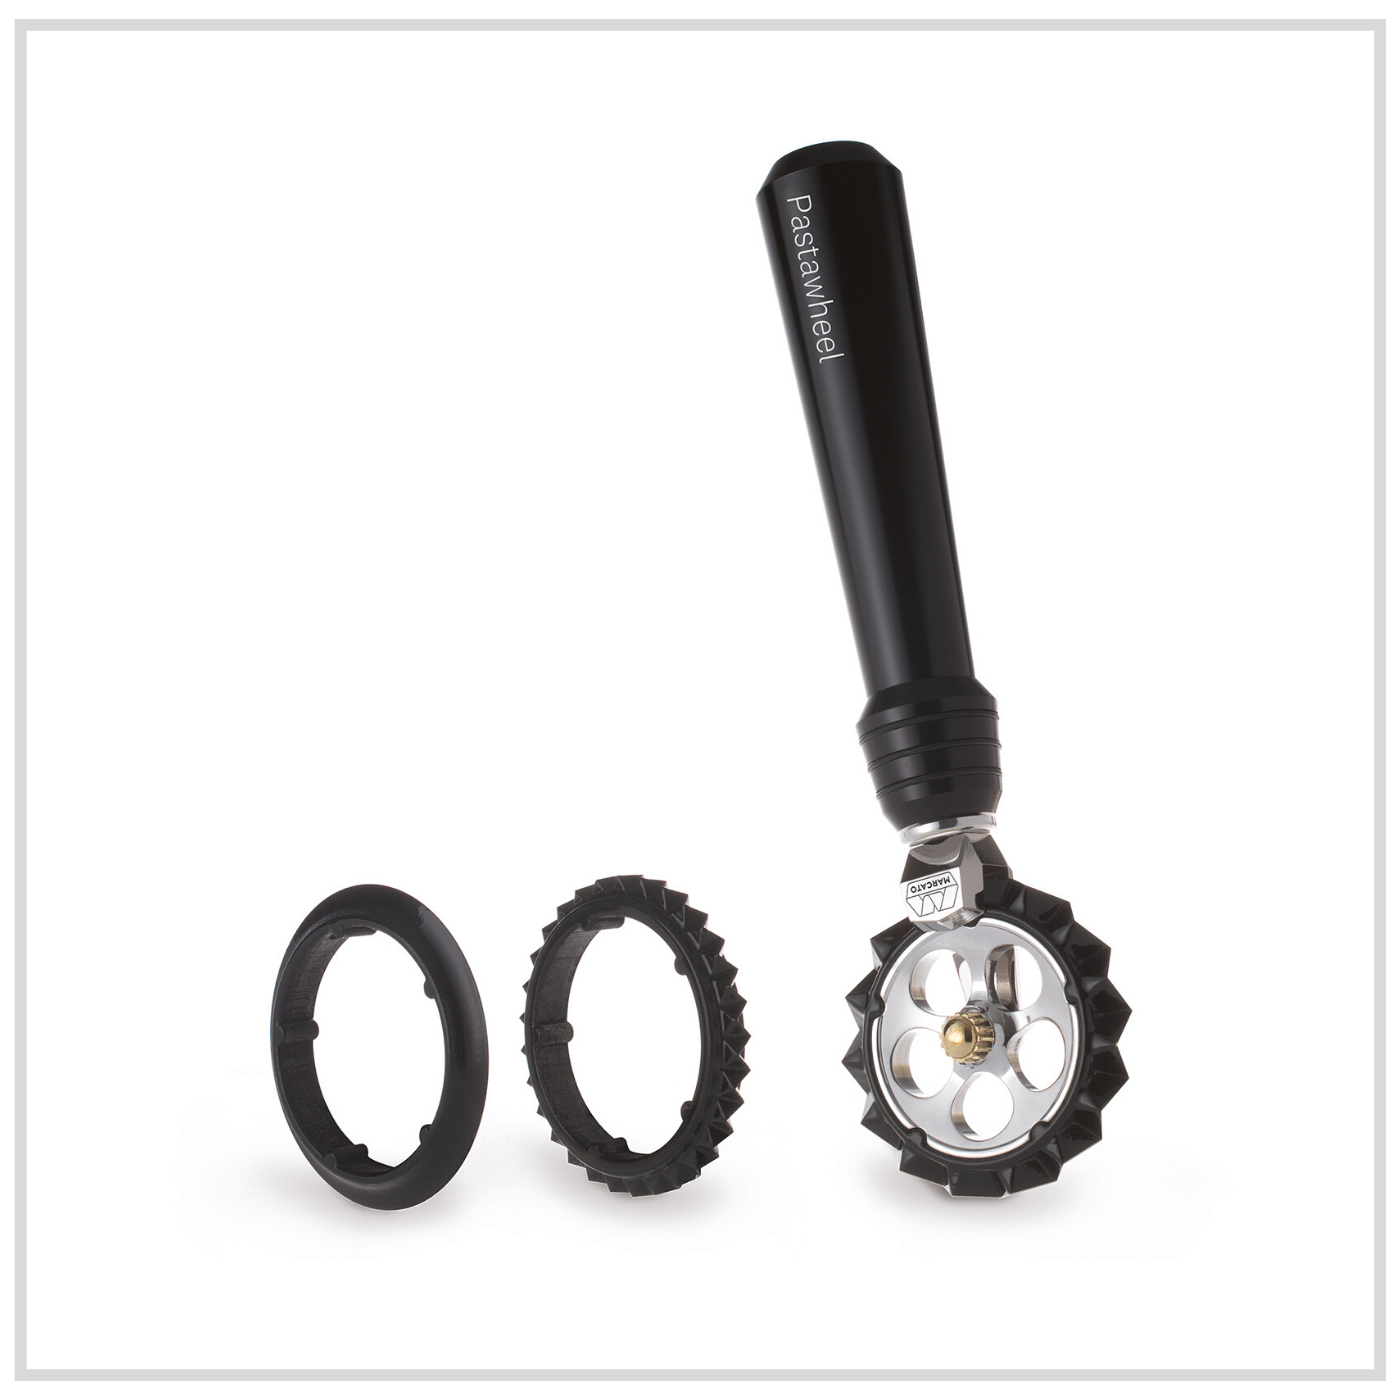 Marcato Pasta Wheel Cutter - Black